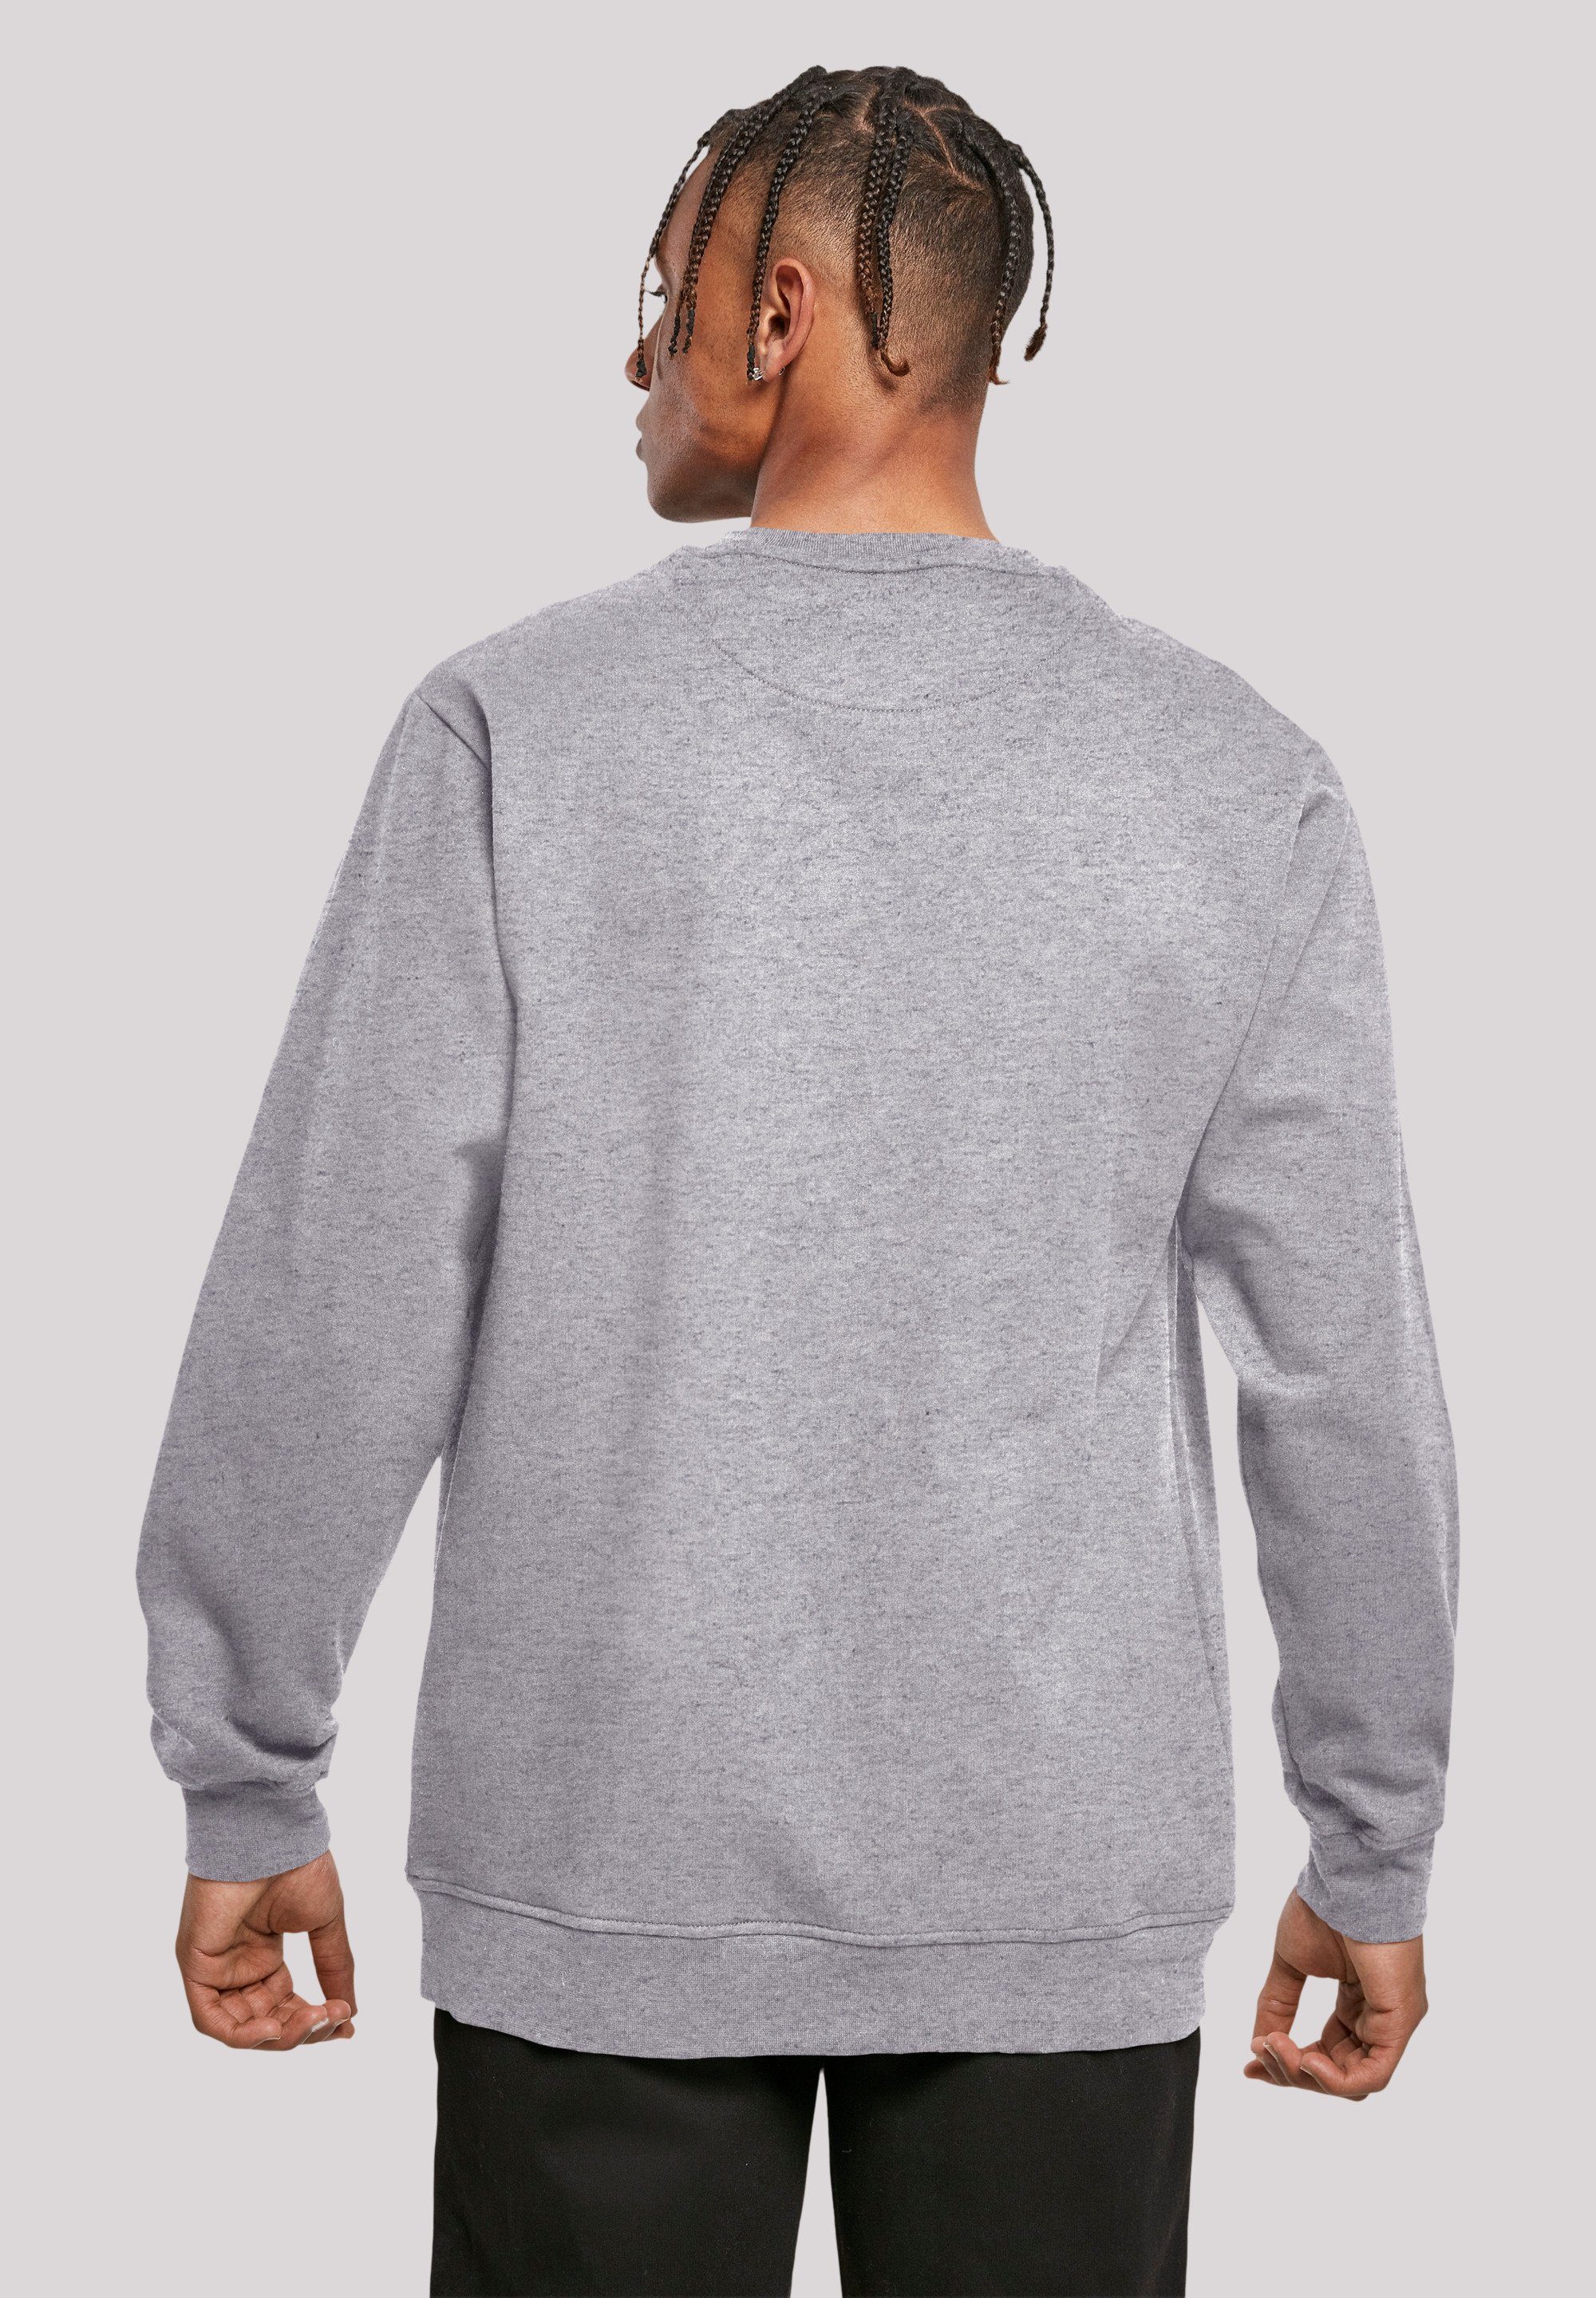 F4NT4STIC Sweatshirt Kiss Rock Band Qualität, Army Premium Musik, Logo Off grey heather By Rock